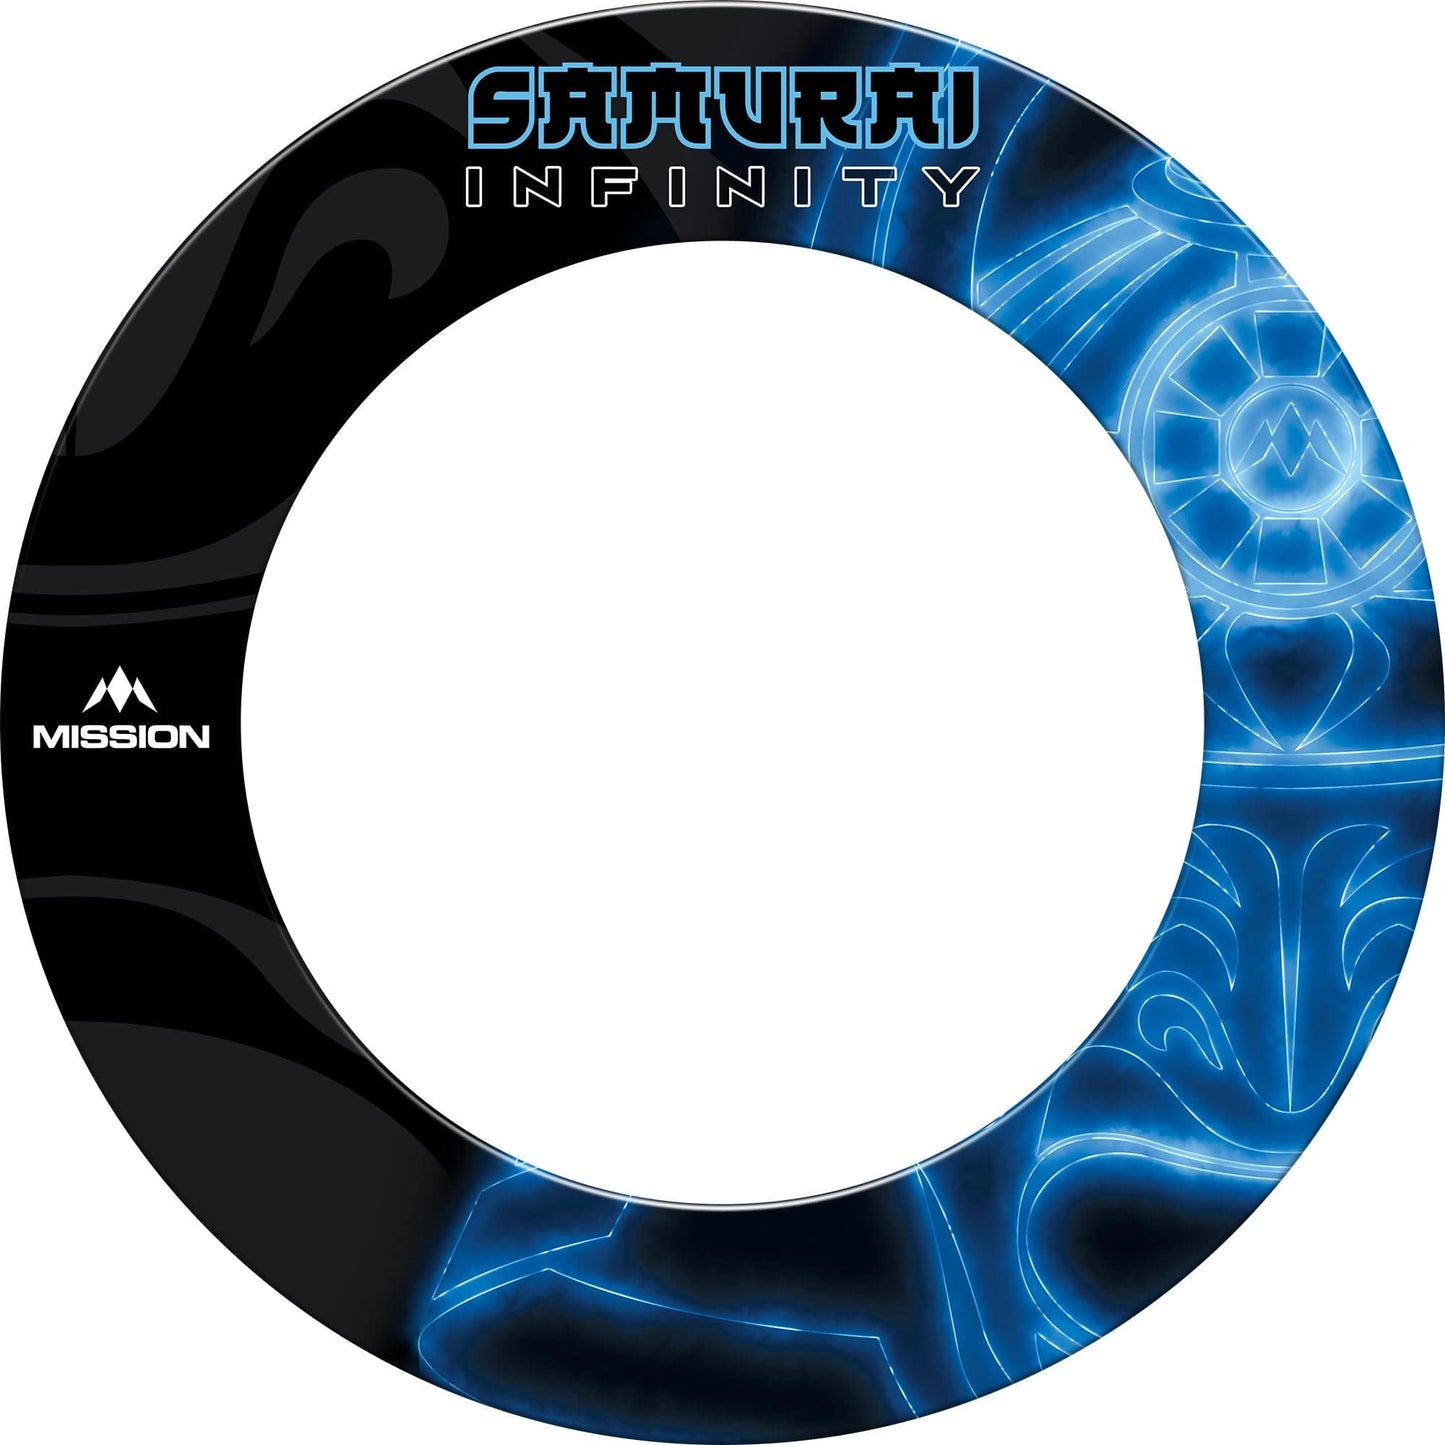 Mission Samurai Infinity Professional Dartboard Surround - Blue